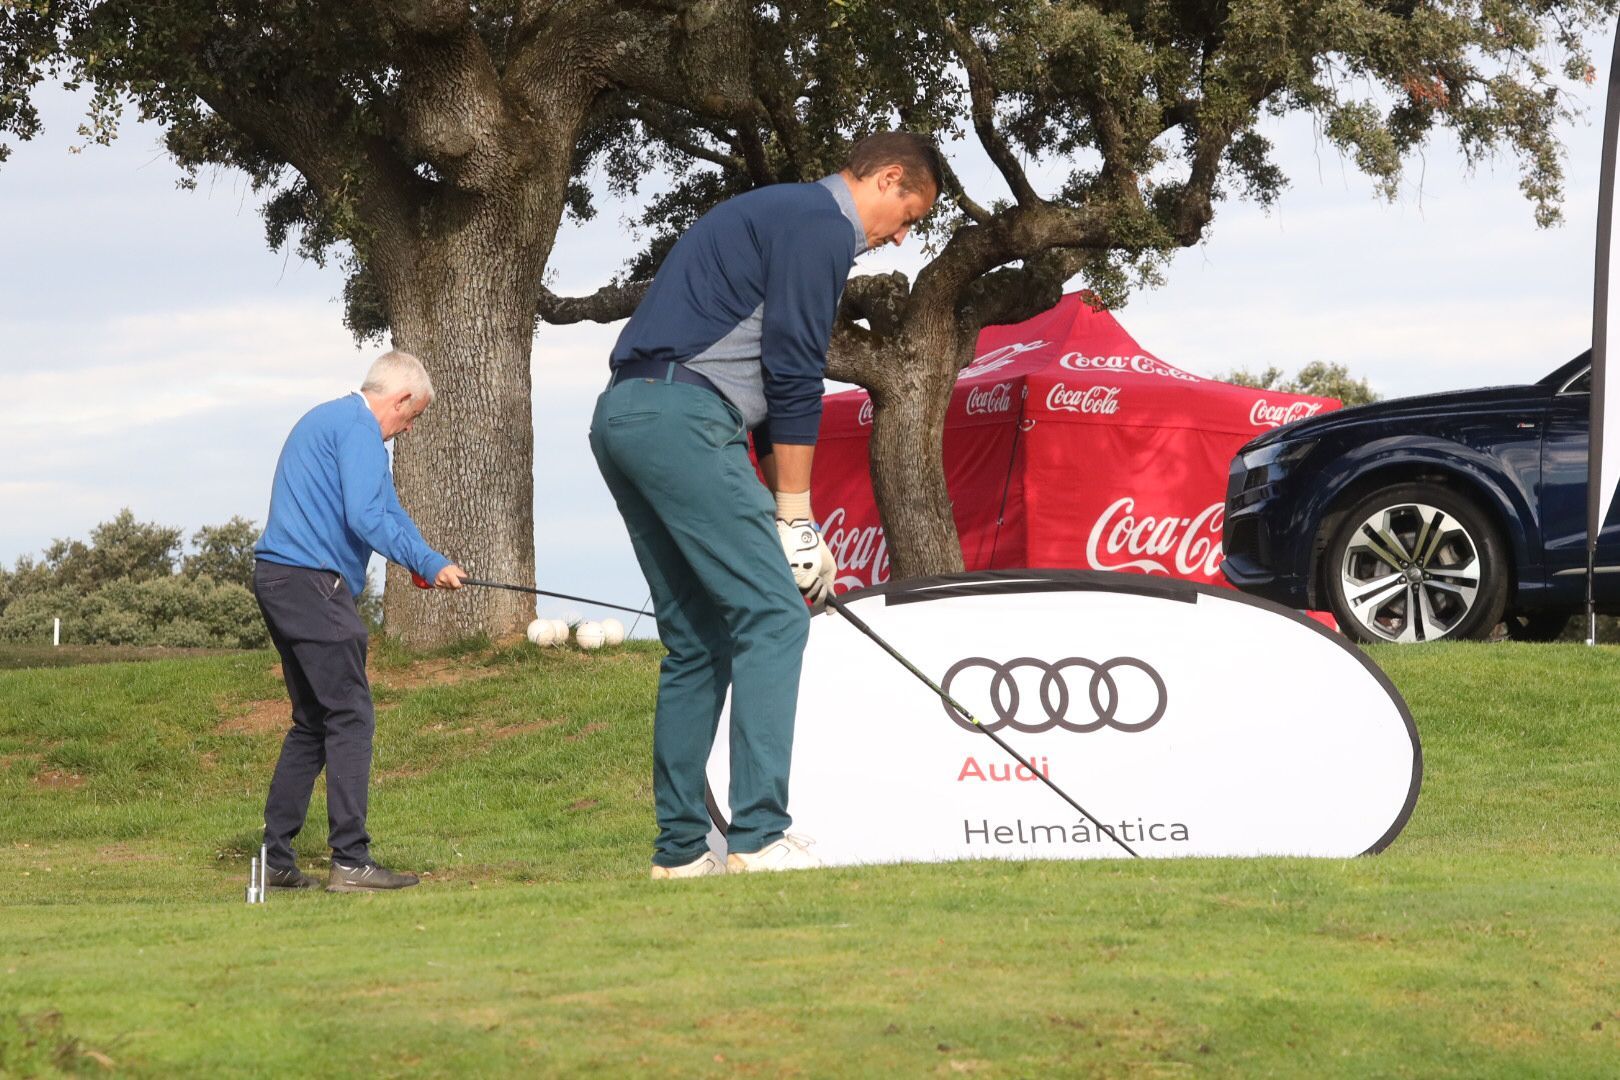 Torneo de Golf Audi Helmántica 31 aniversario / FOTO SALAMANCA24HORAS.COM